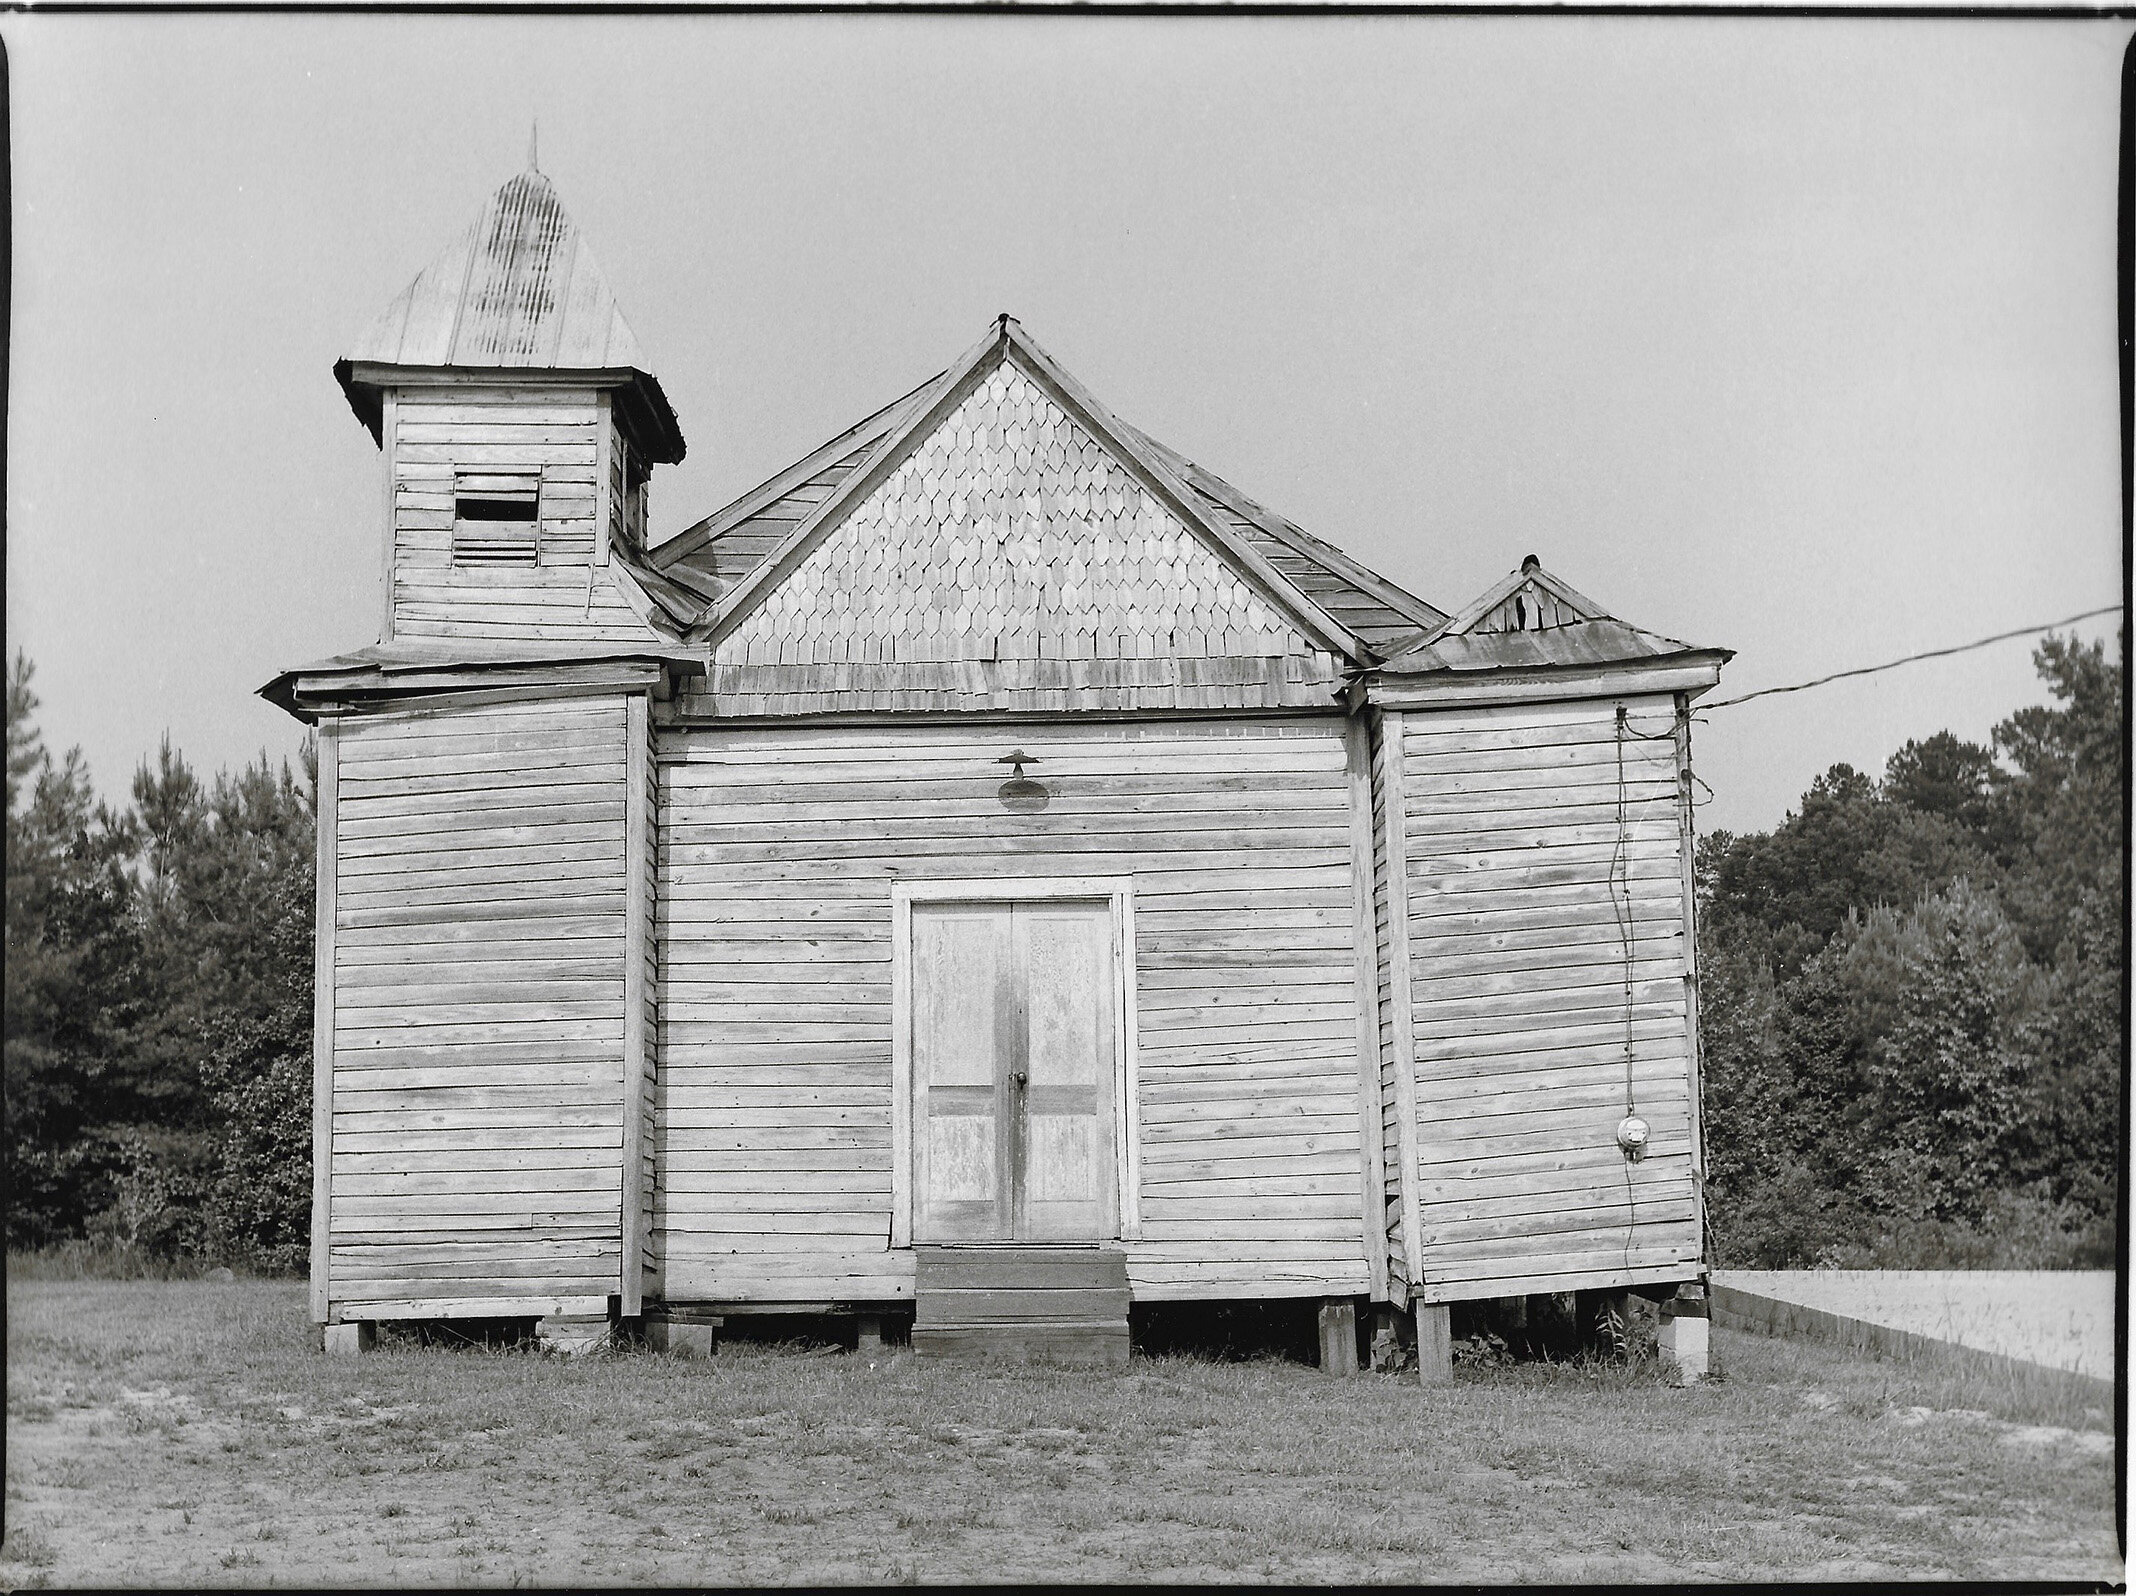   Zion Watch Church, Steward County, GA  1980 Gelatin silver print 7 x 9 1/2 in. (image size) The Do Good Fund, Inc., 2020-058 